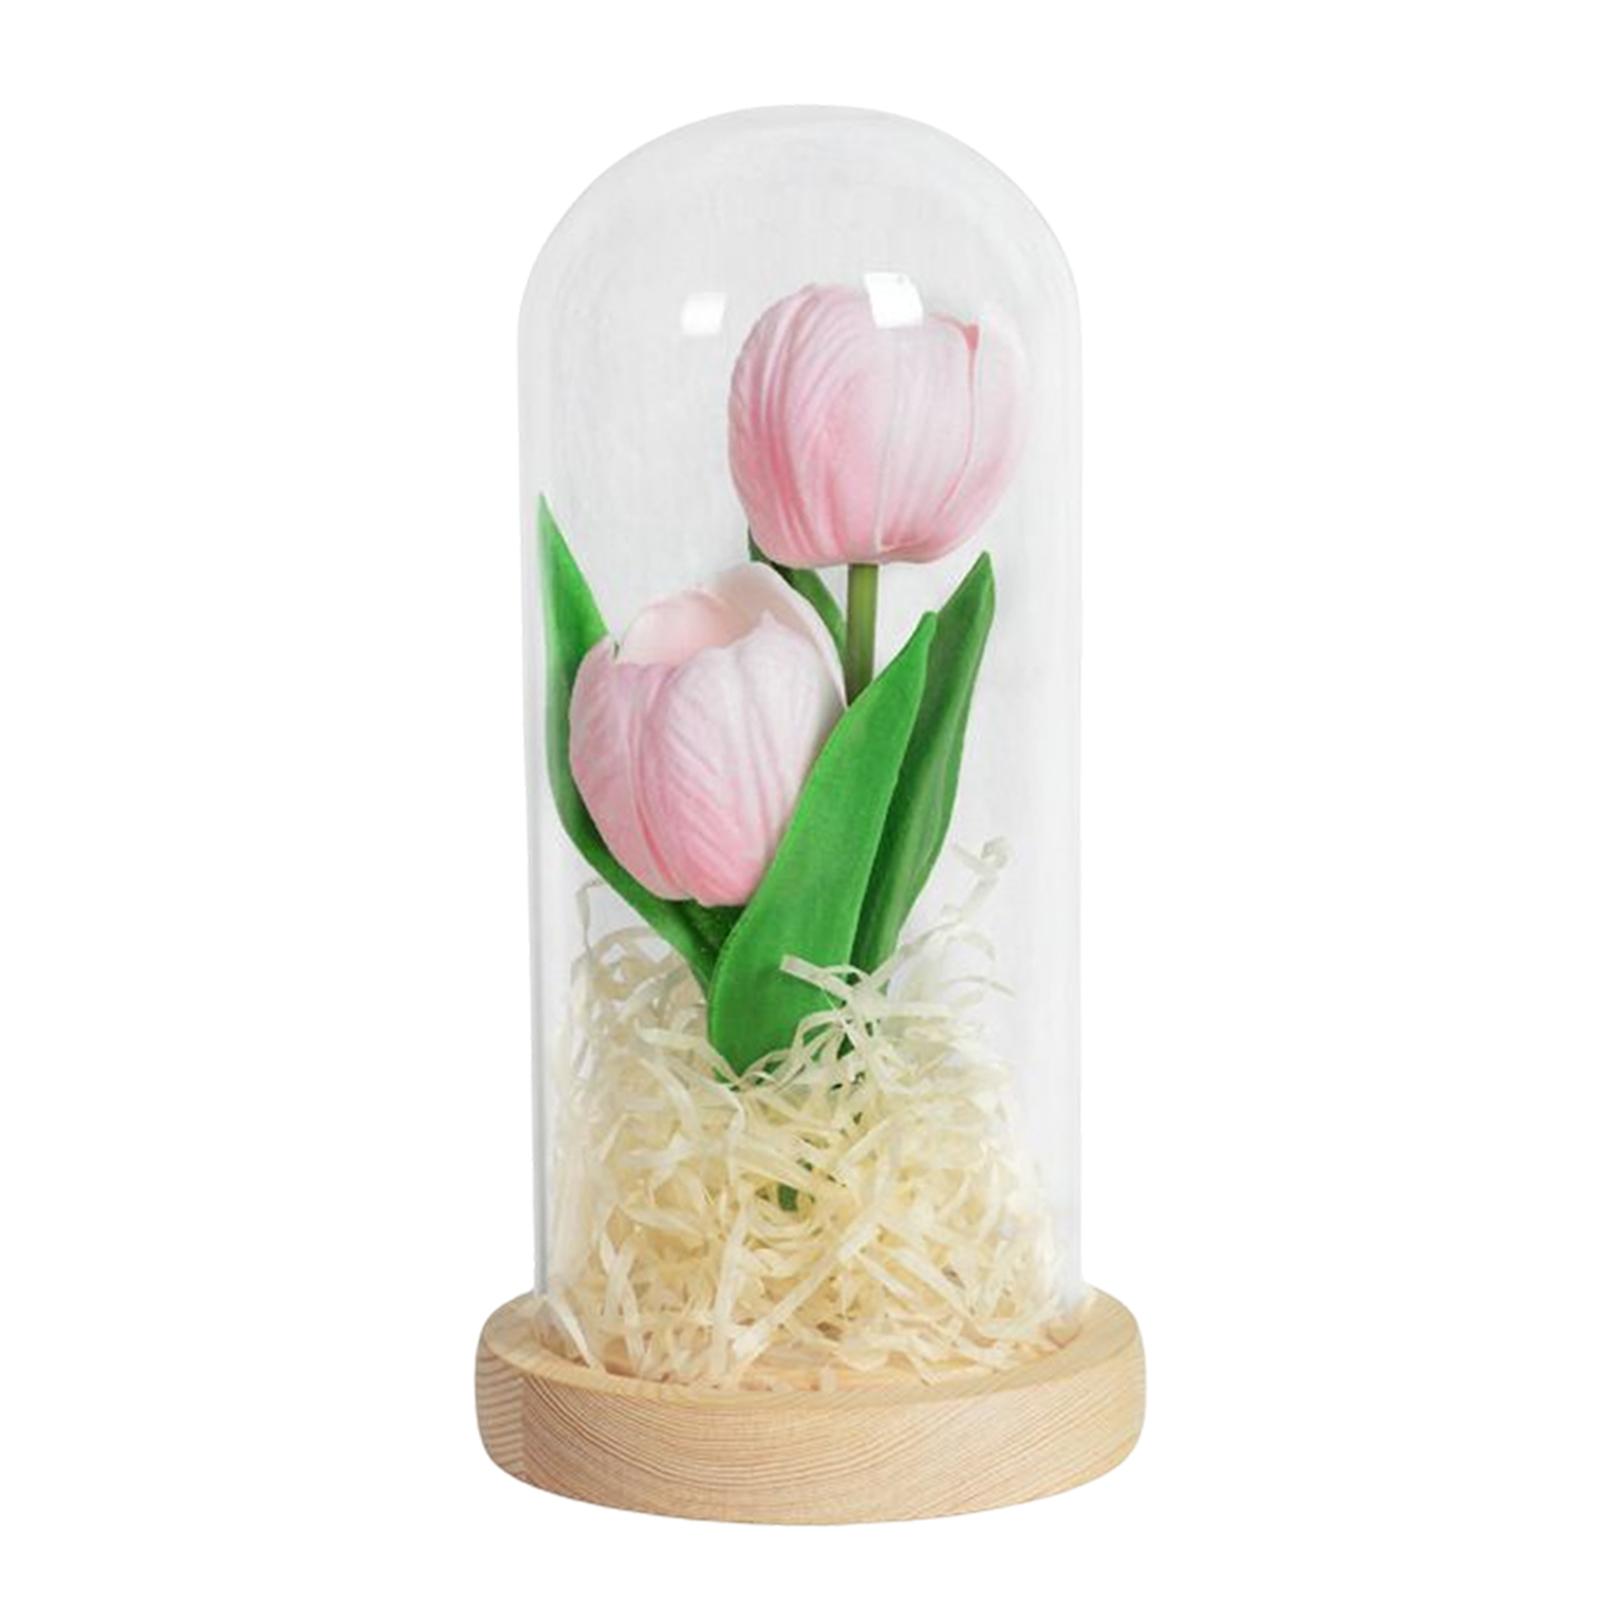 Faux Flower LED Light Flowers Dome Scenery Supplies Centerpiece Romantic Pink